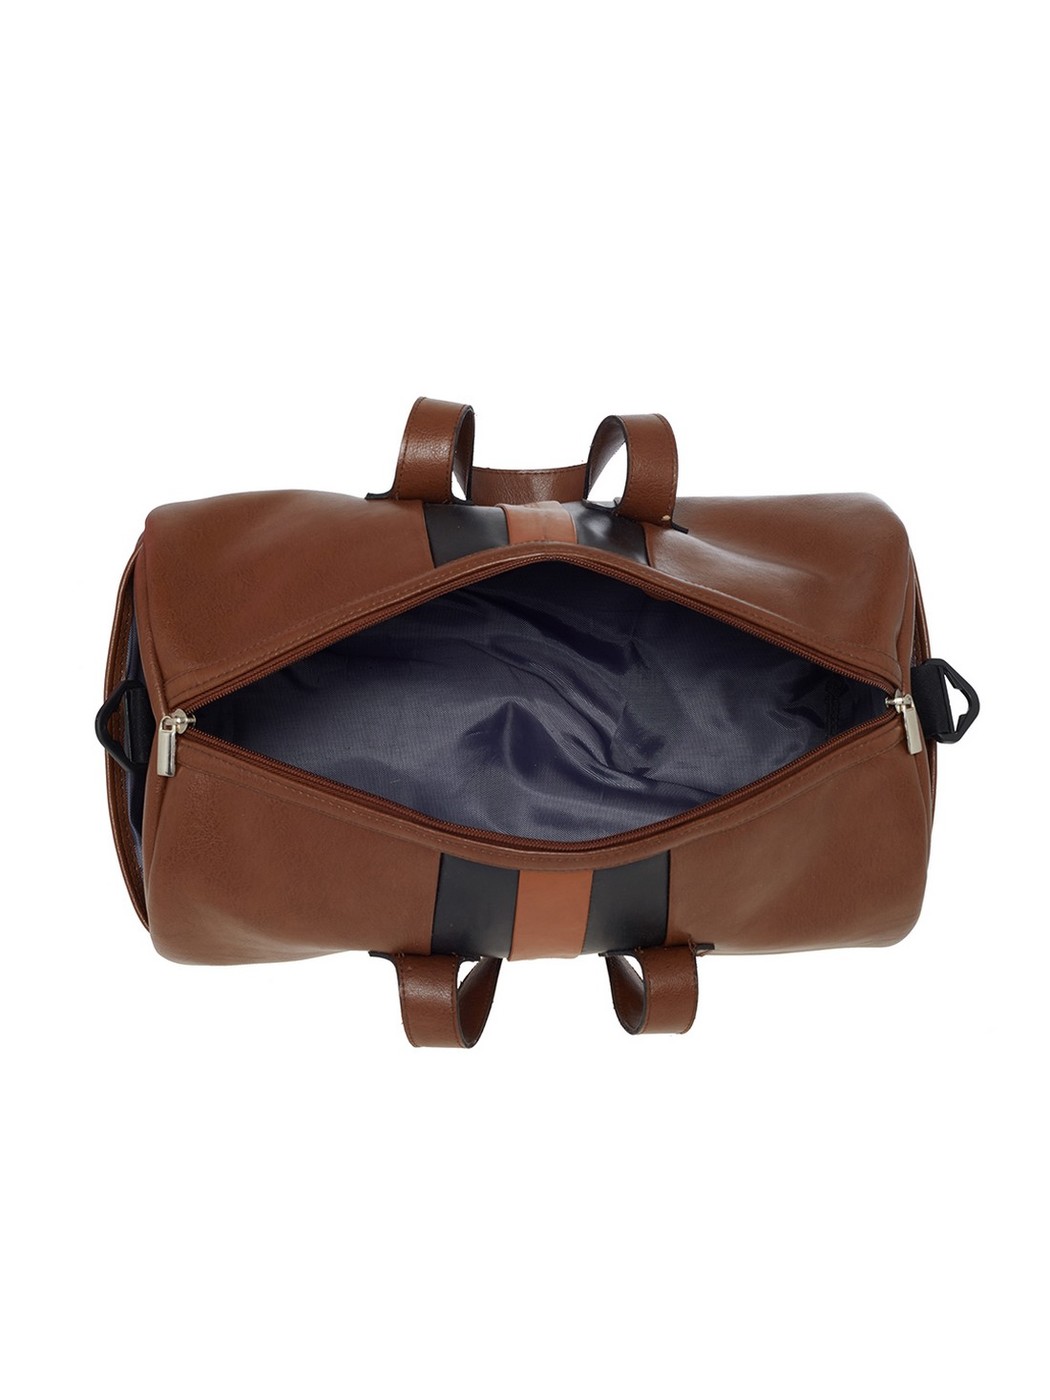 Buy BagsRUs - Luggage Trolley Bag / Travel Bag - Purple Color Online-  Shopclues.com